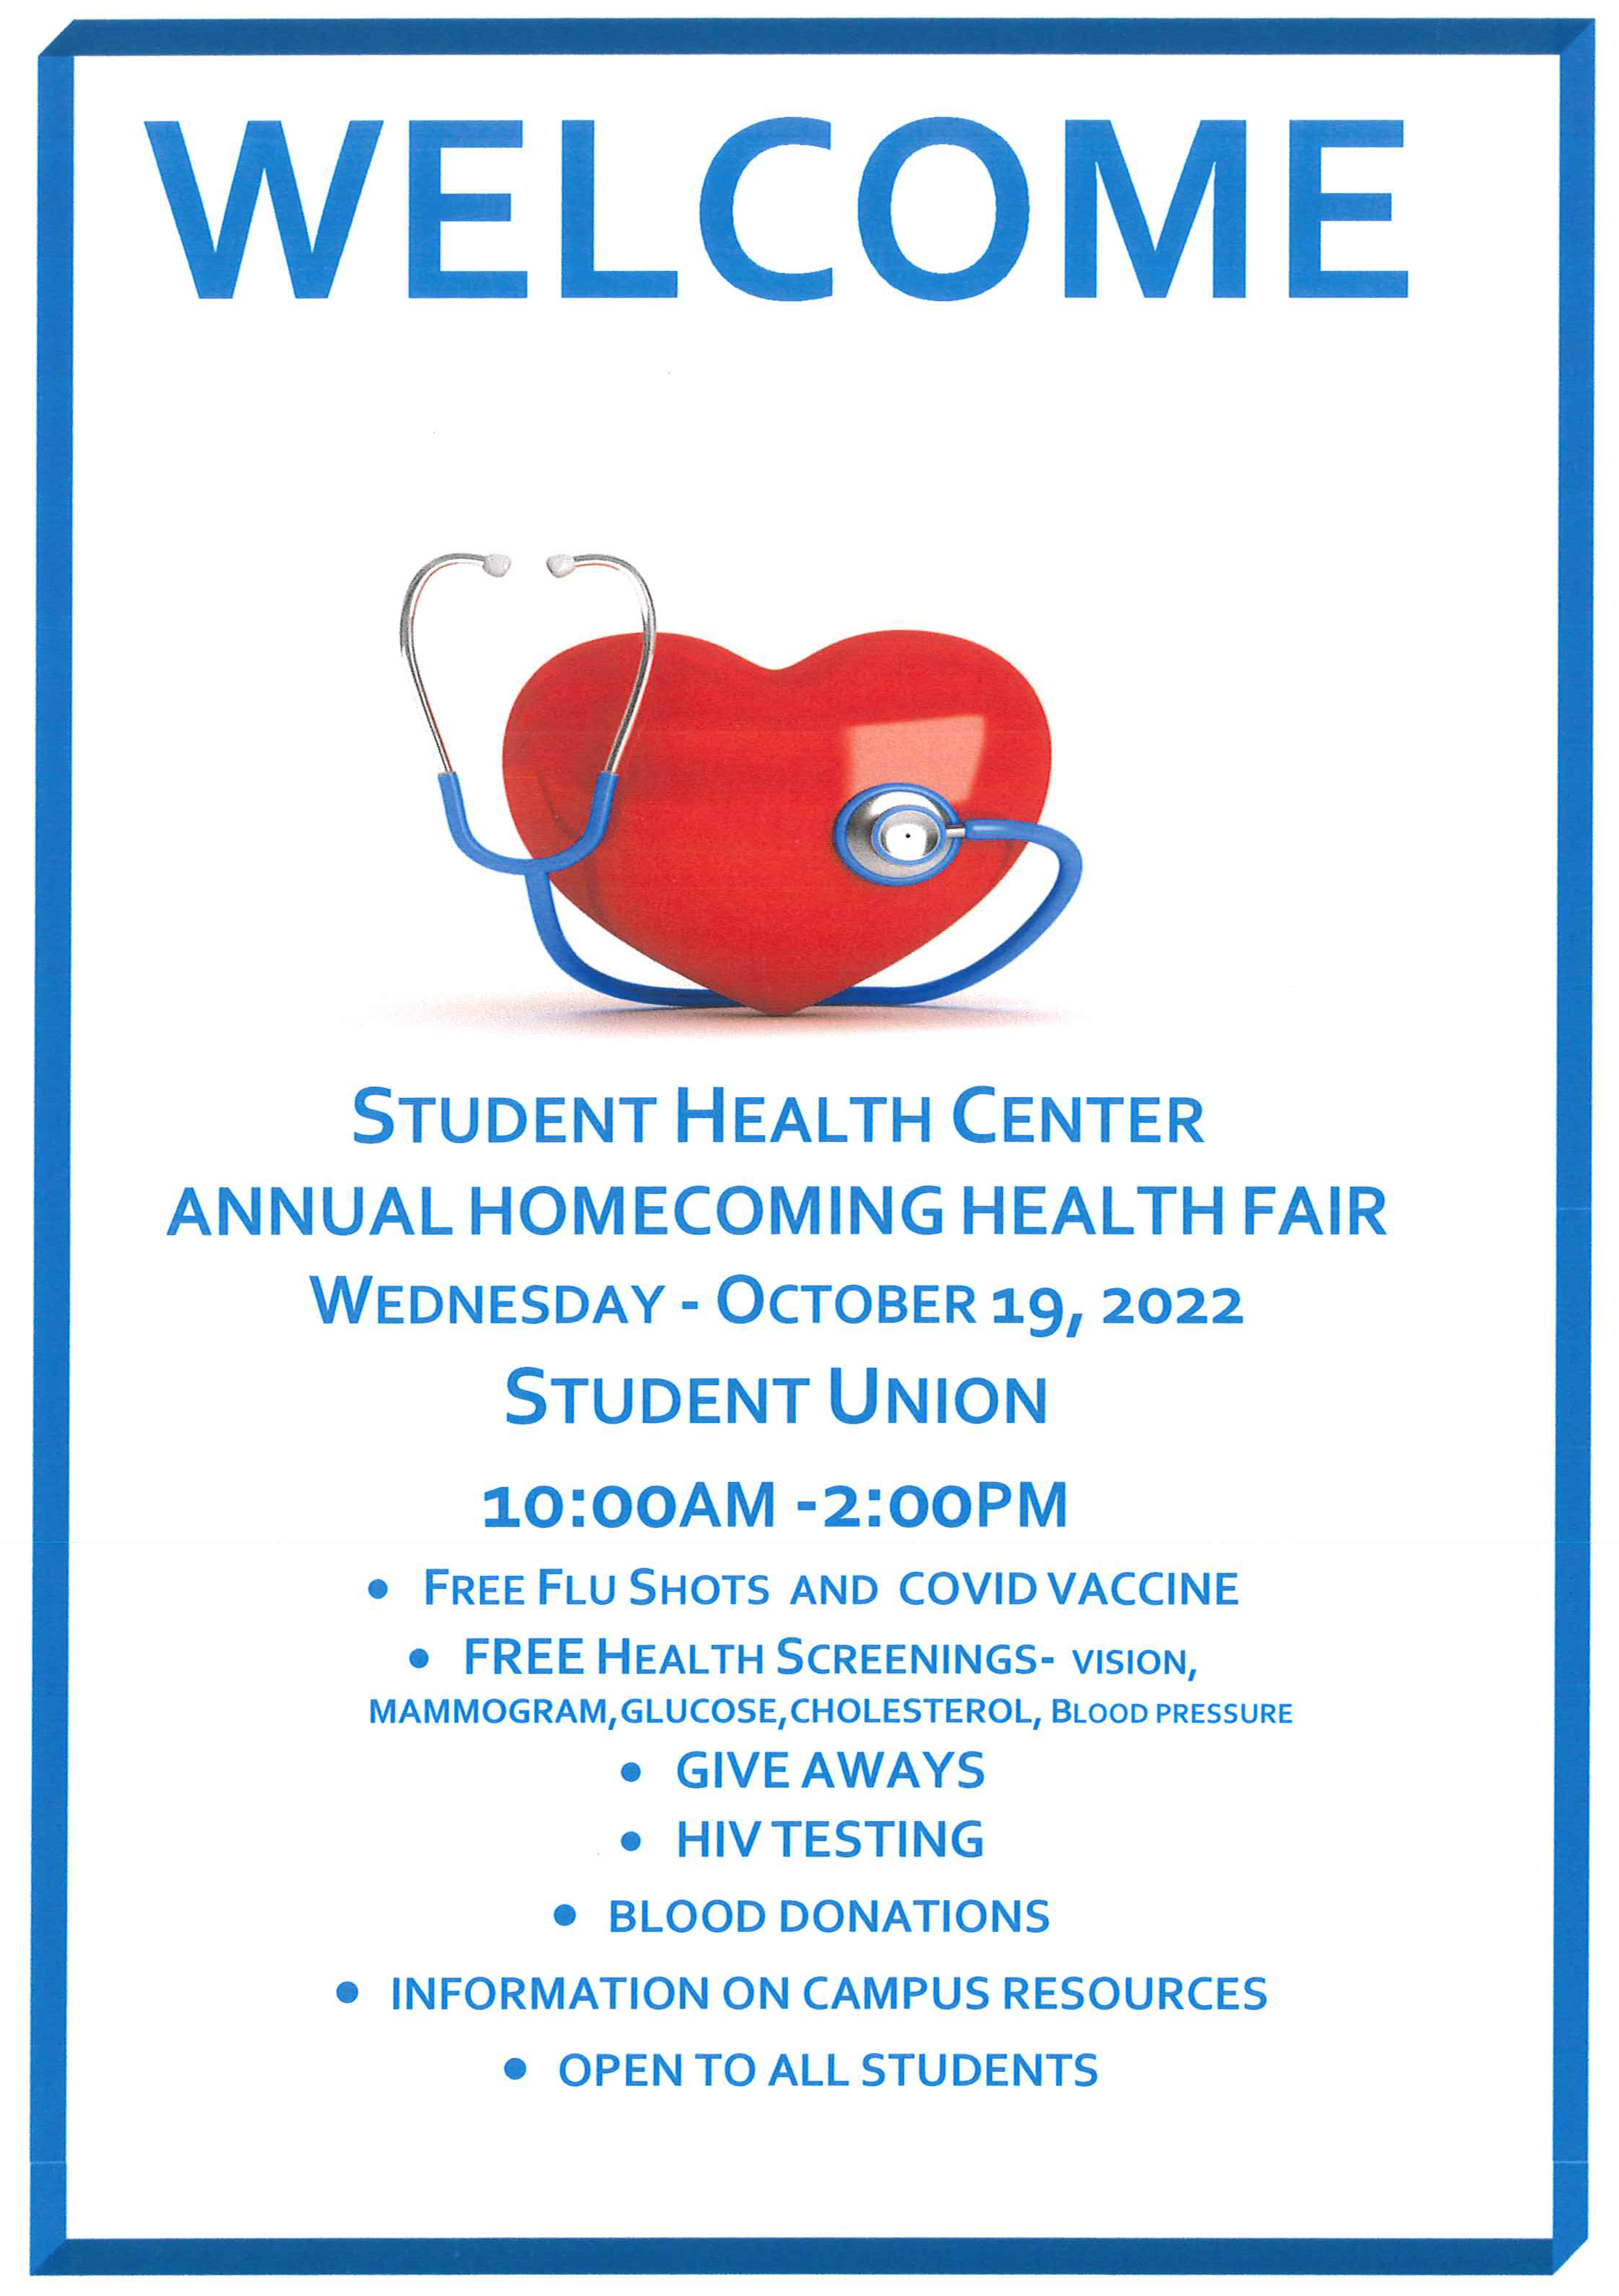 Student Health Center's Annual Homecoming Health Fair